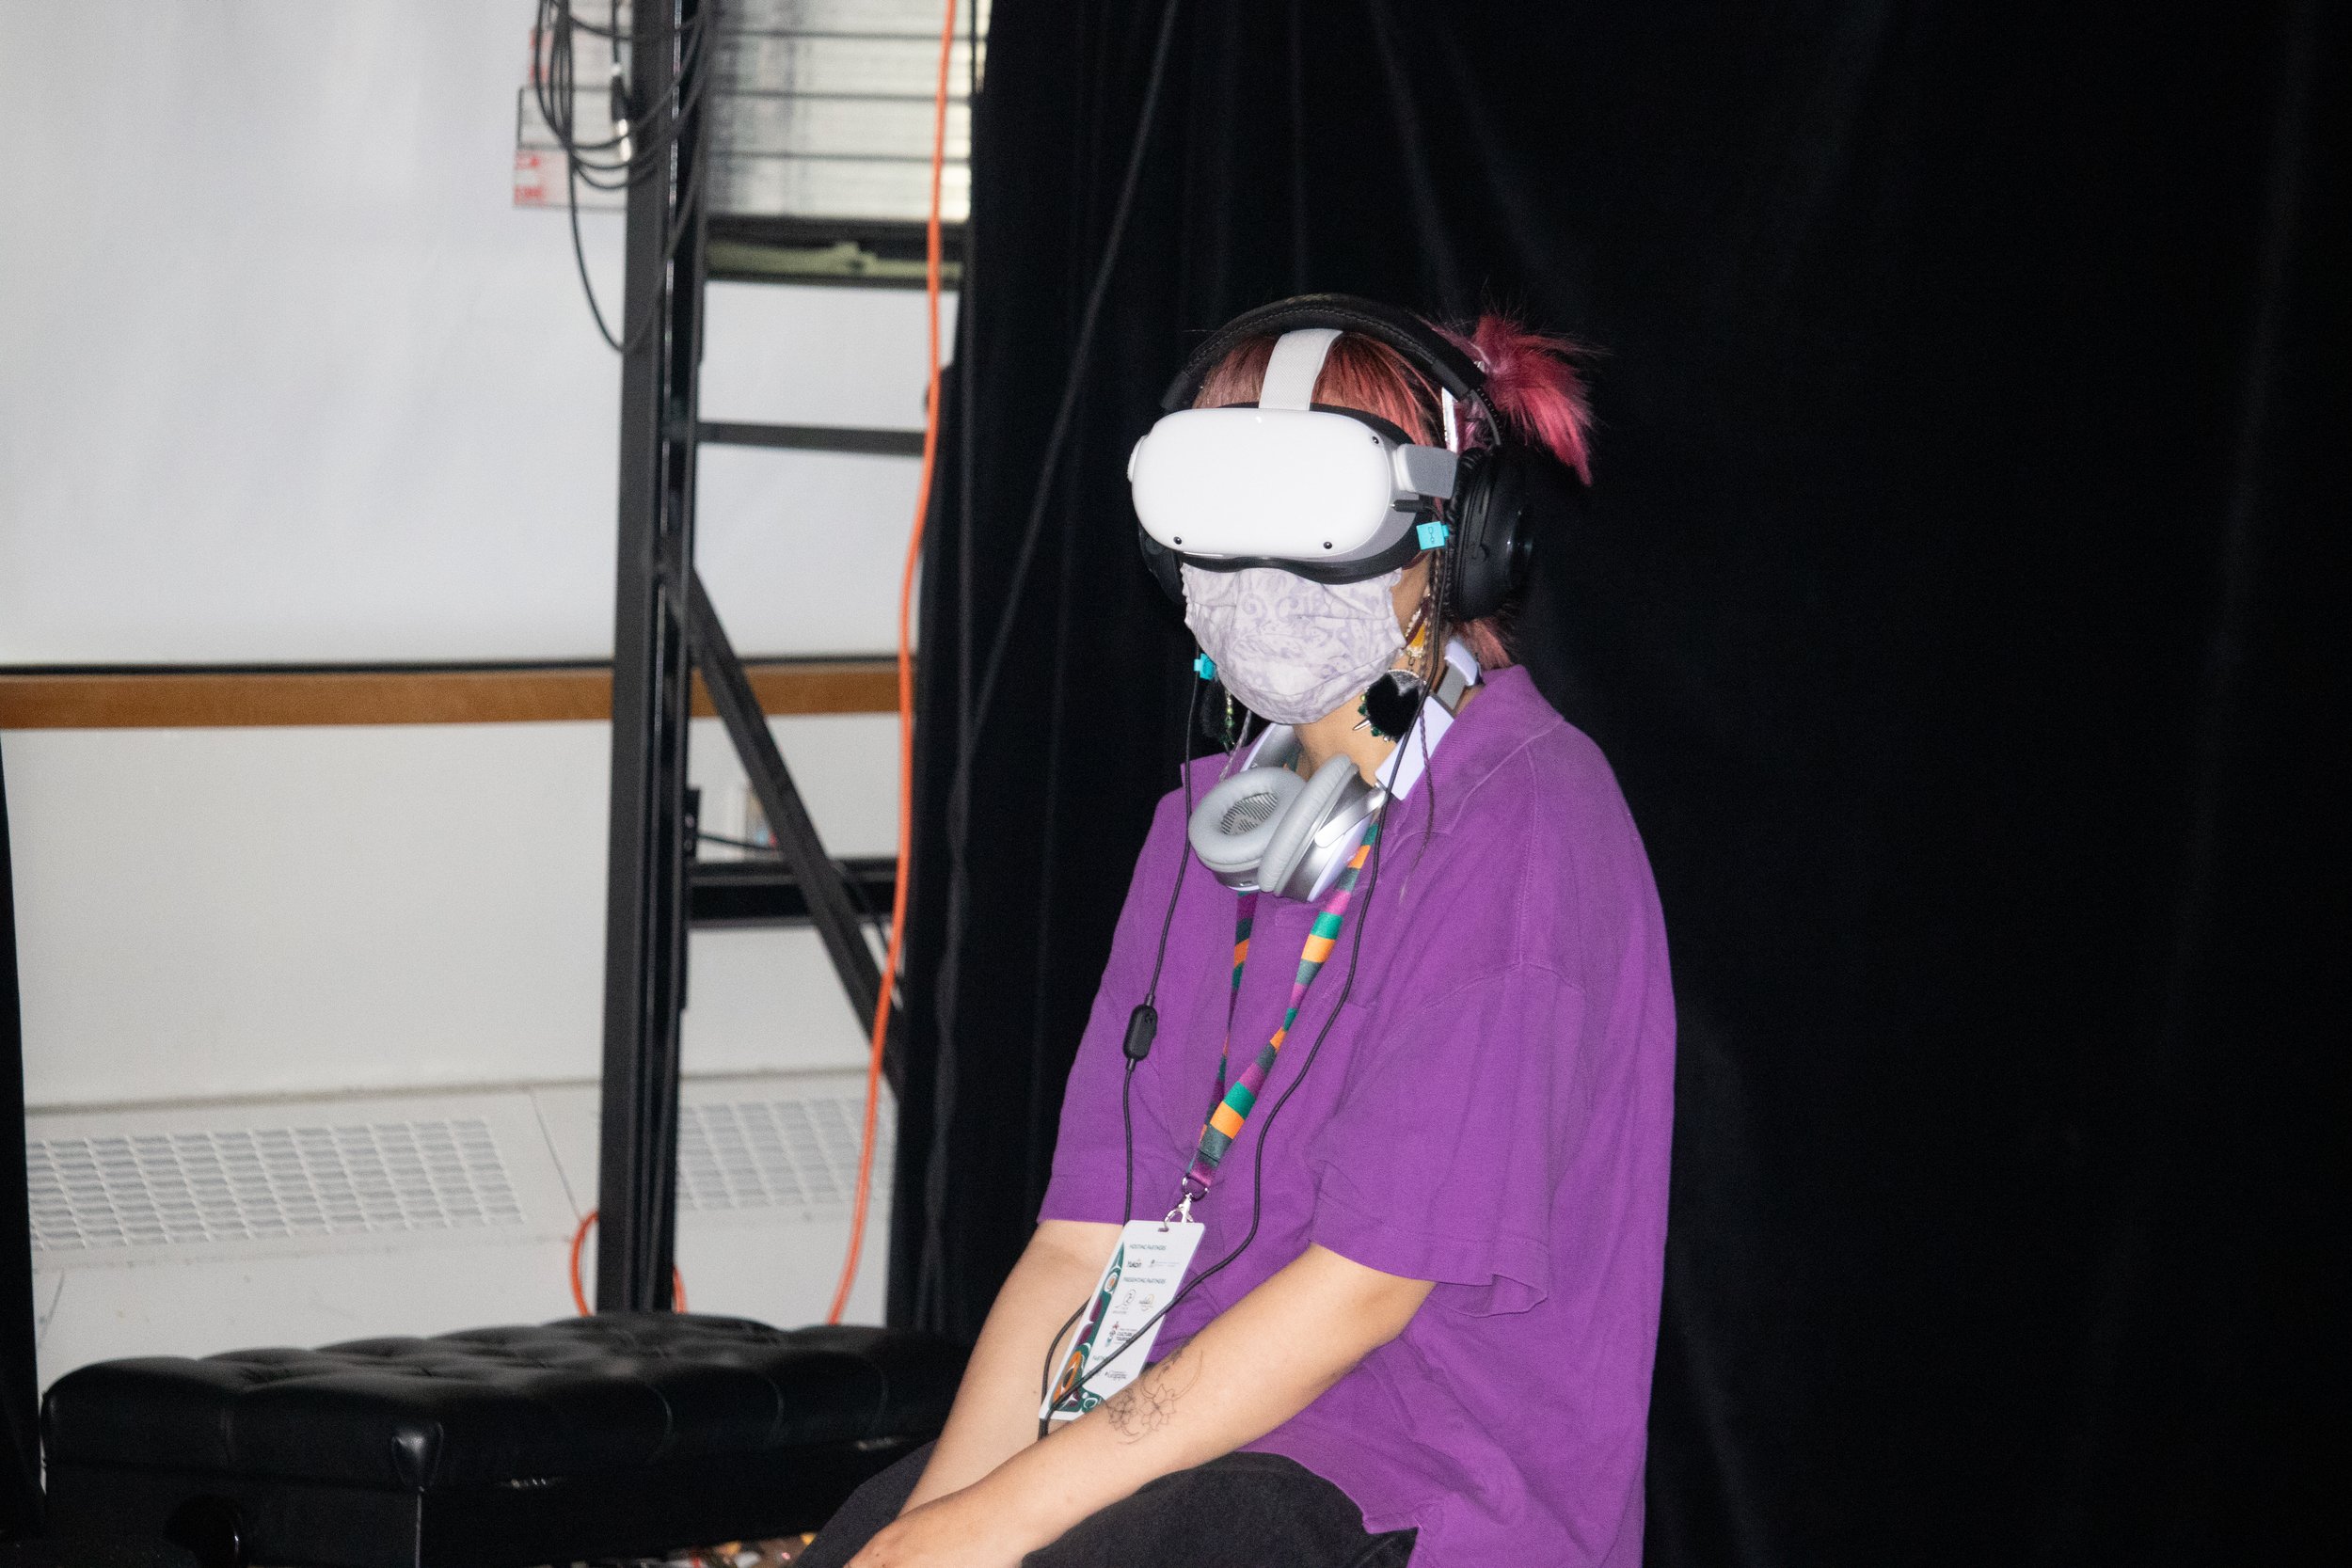  Ilinniaqtuk, Siku Rojas, uses a VR headset to watch ARCTIC XR at the Arctic Arts Summit, Whitehorse, Yukon, 2022. 